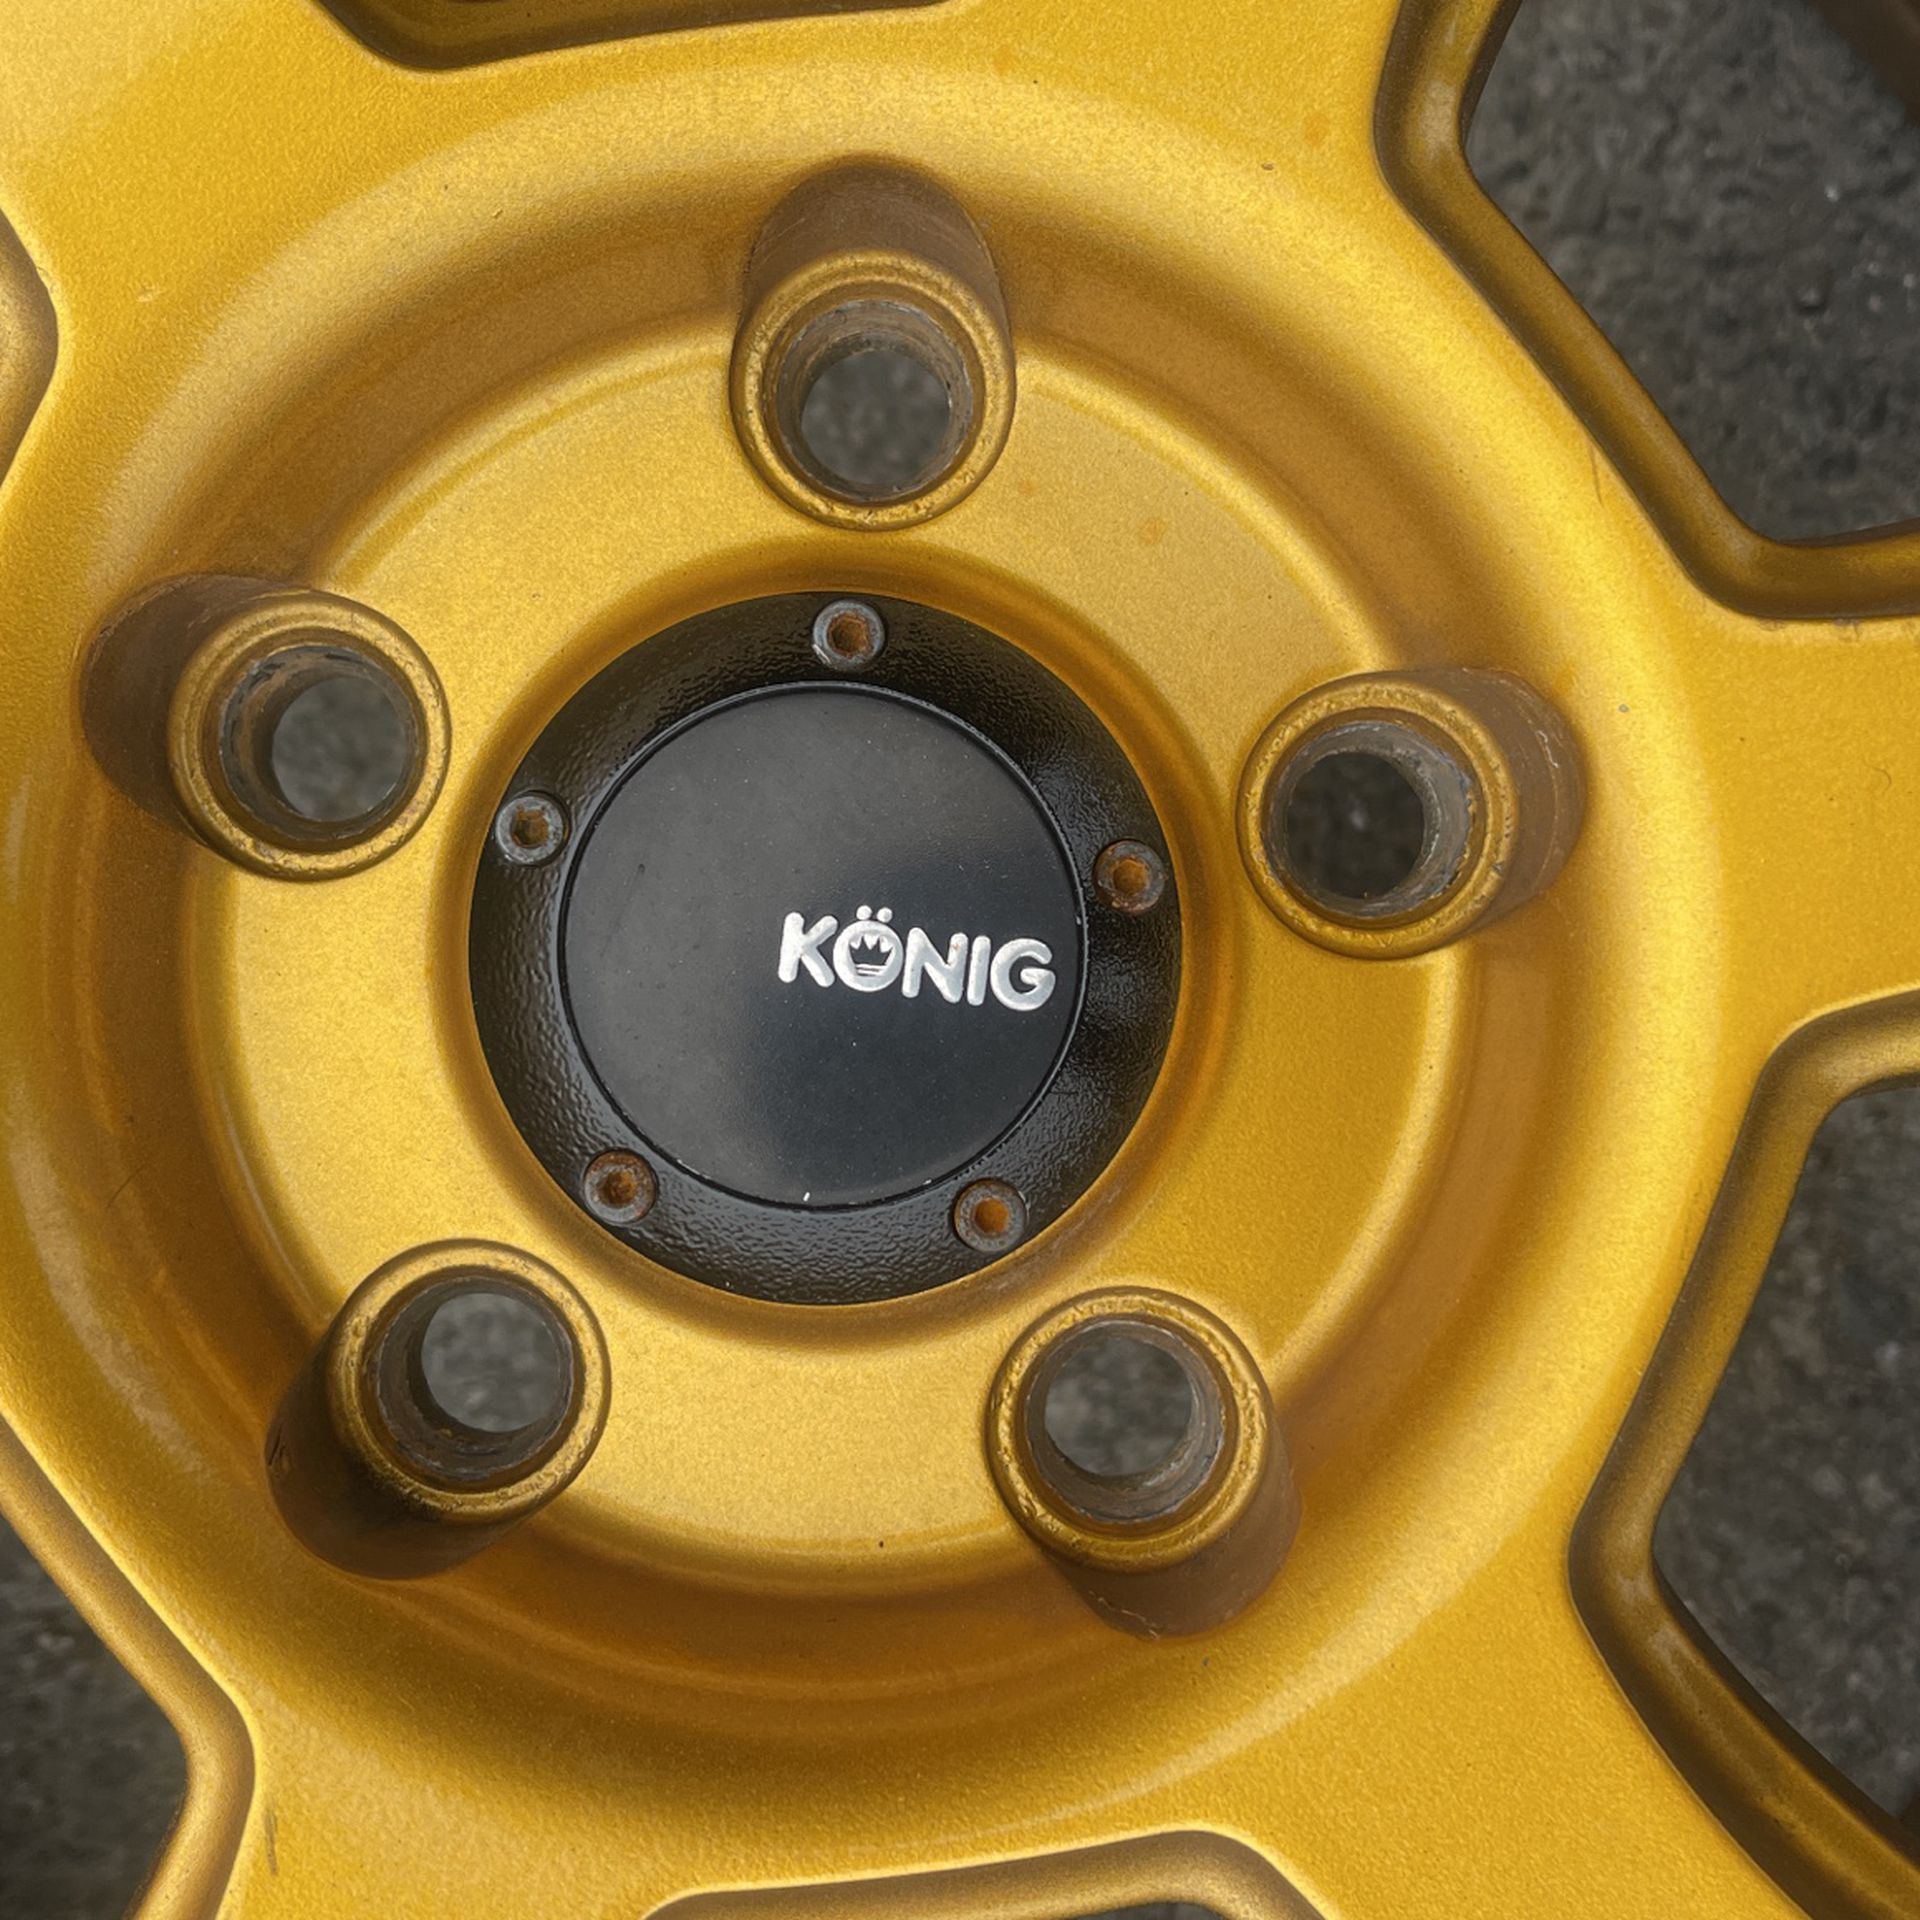 KONIG 18” Wheel & Tires for Sale in El Monte, CA - OfferUp